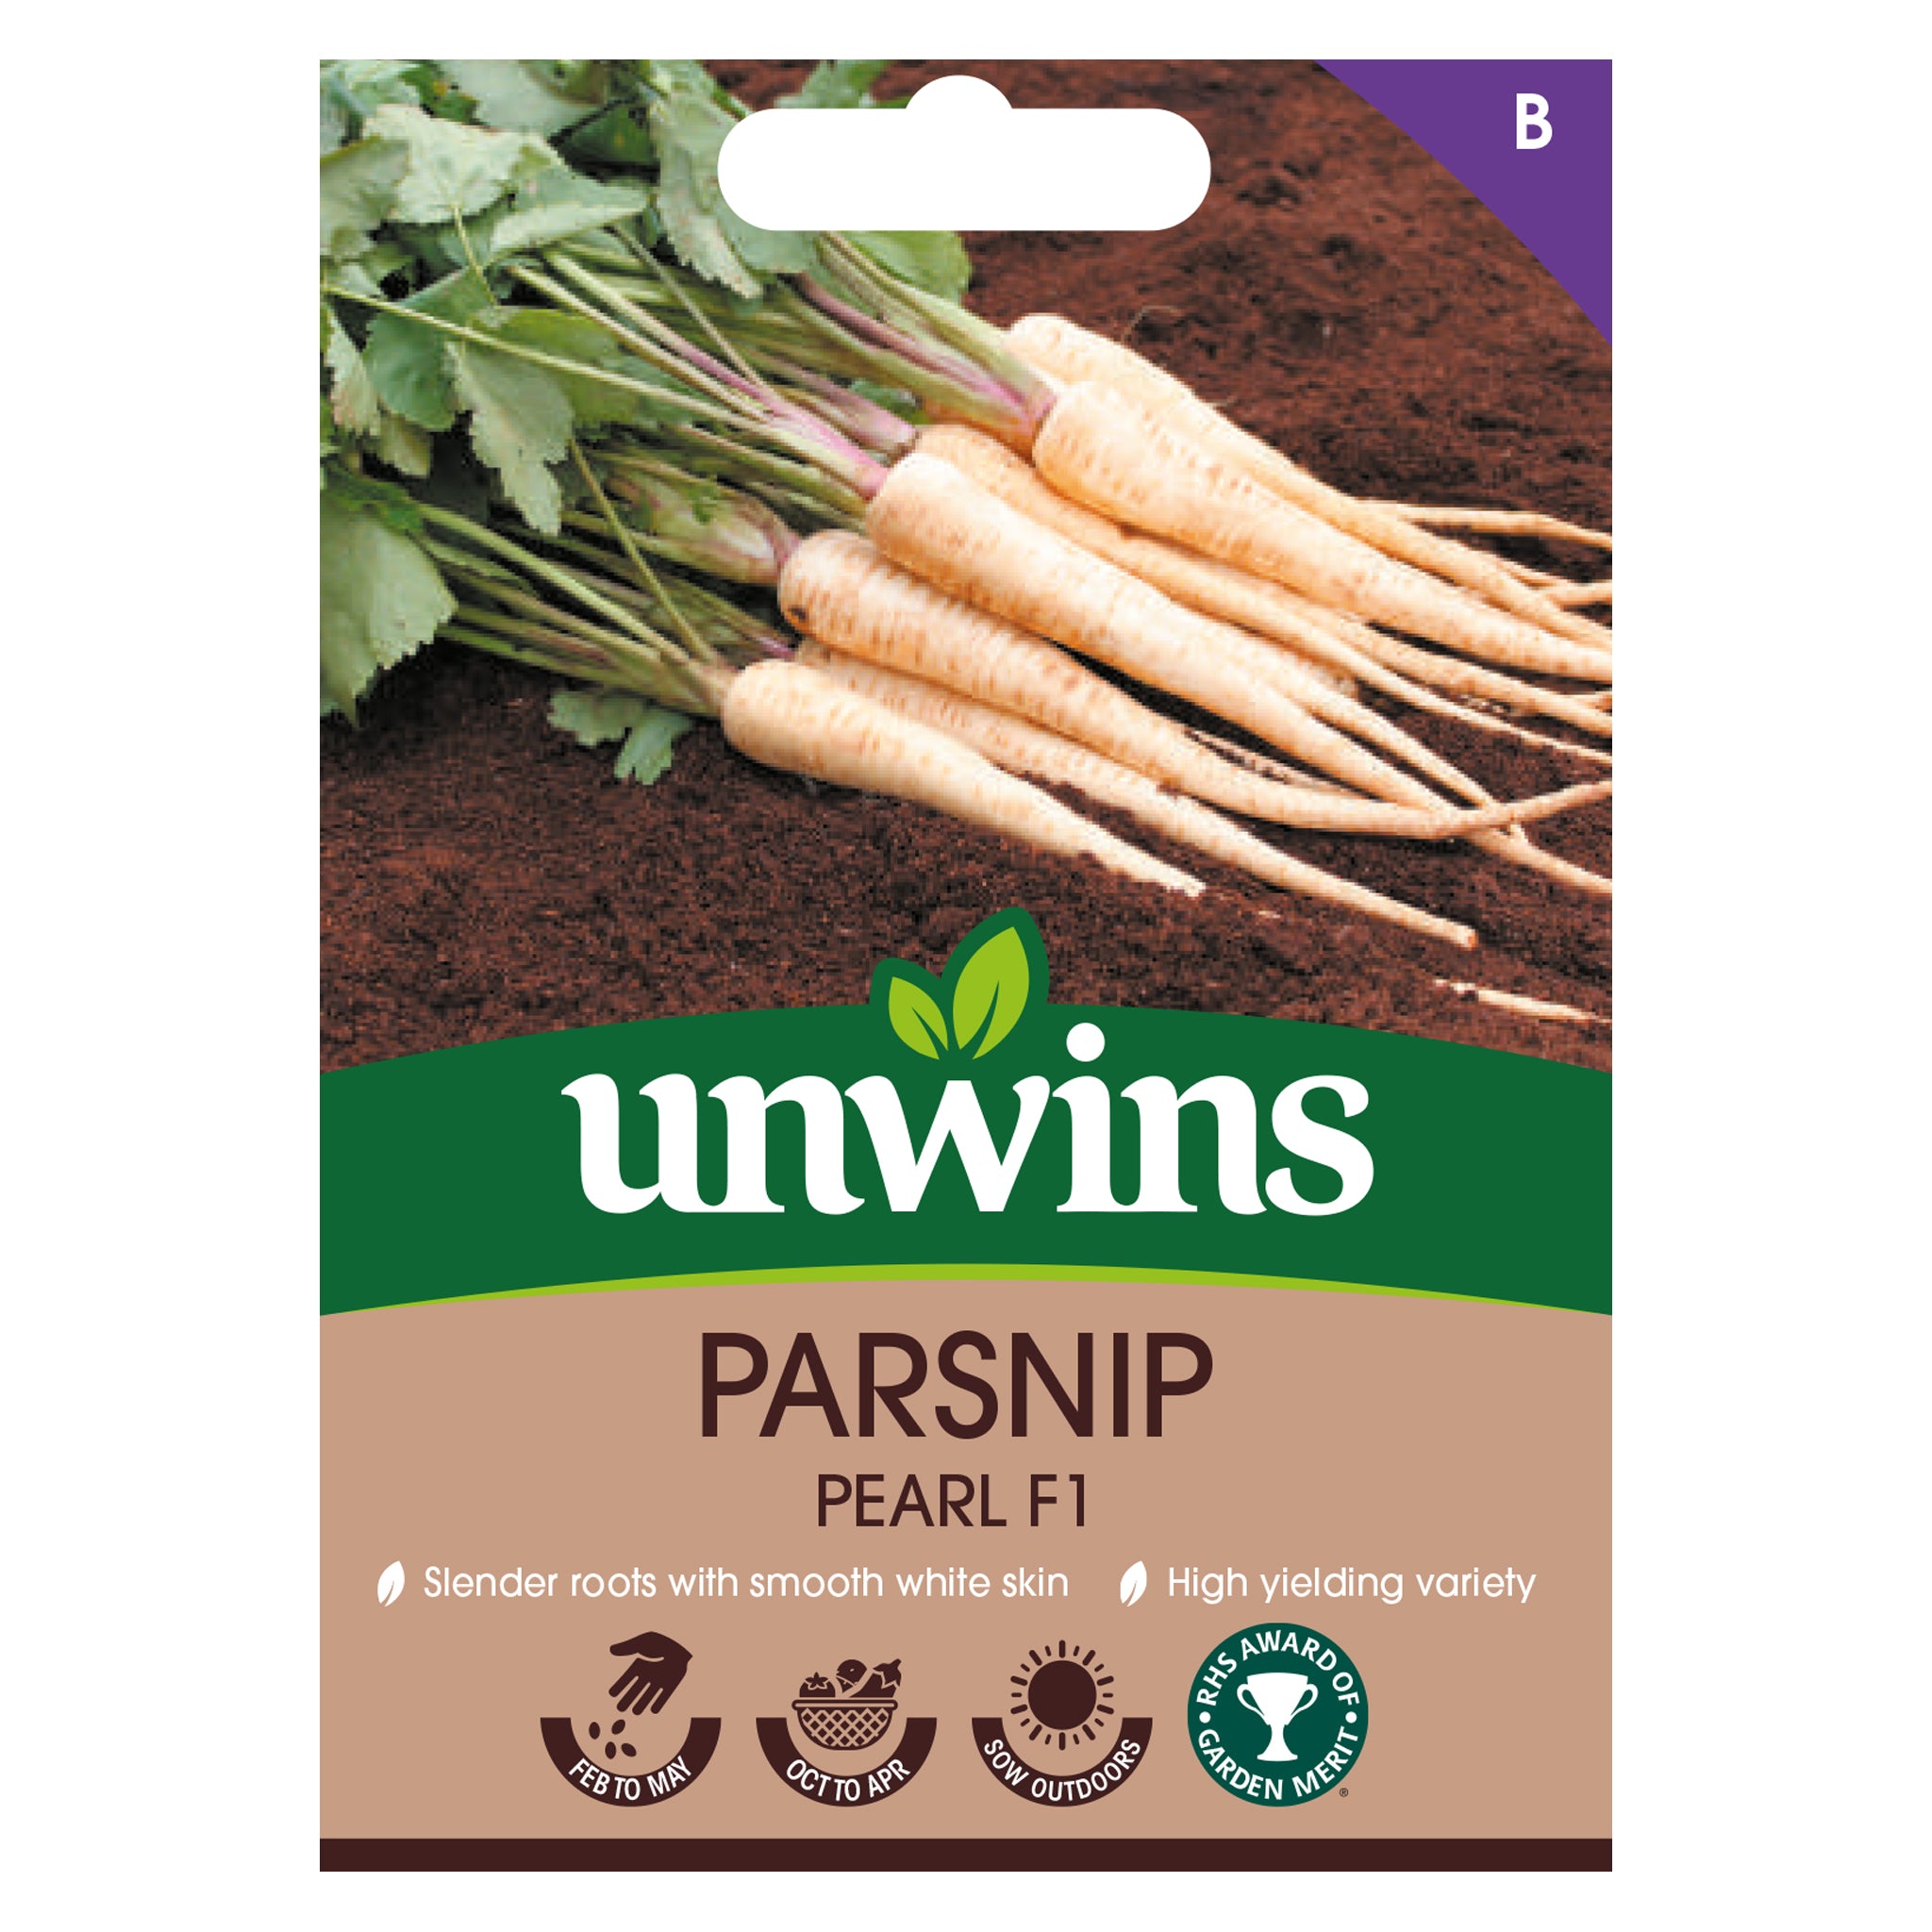 Unwins Parsnip Pearl F1 Seeds